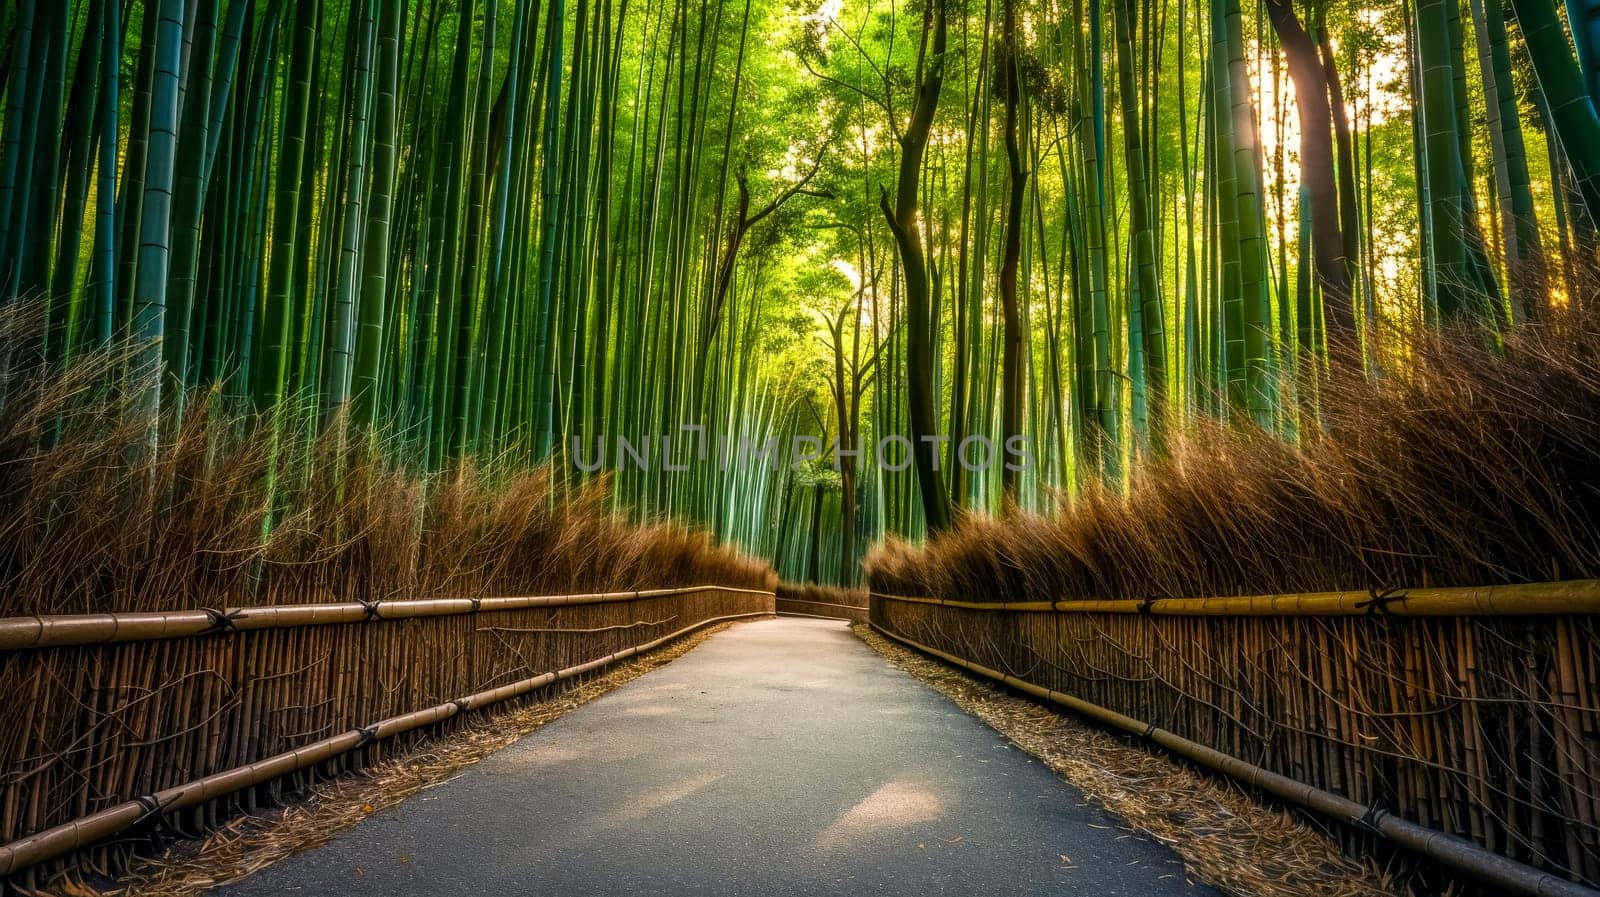 Warm sunlight filters through tall bamboo, illuminating a peaceful pathway